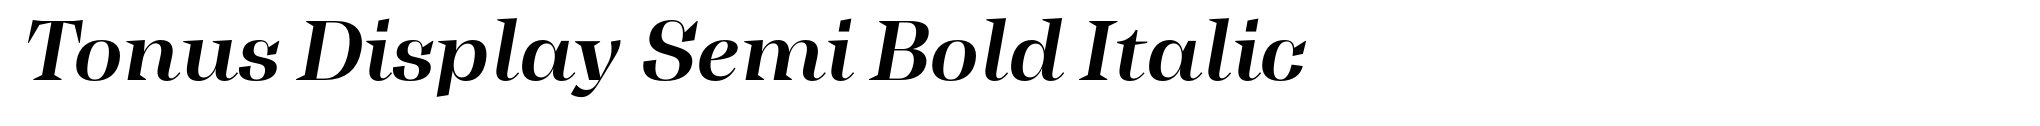 Tonus Display Semi Bold Italic image